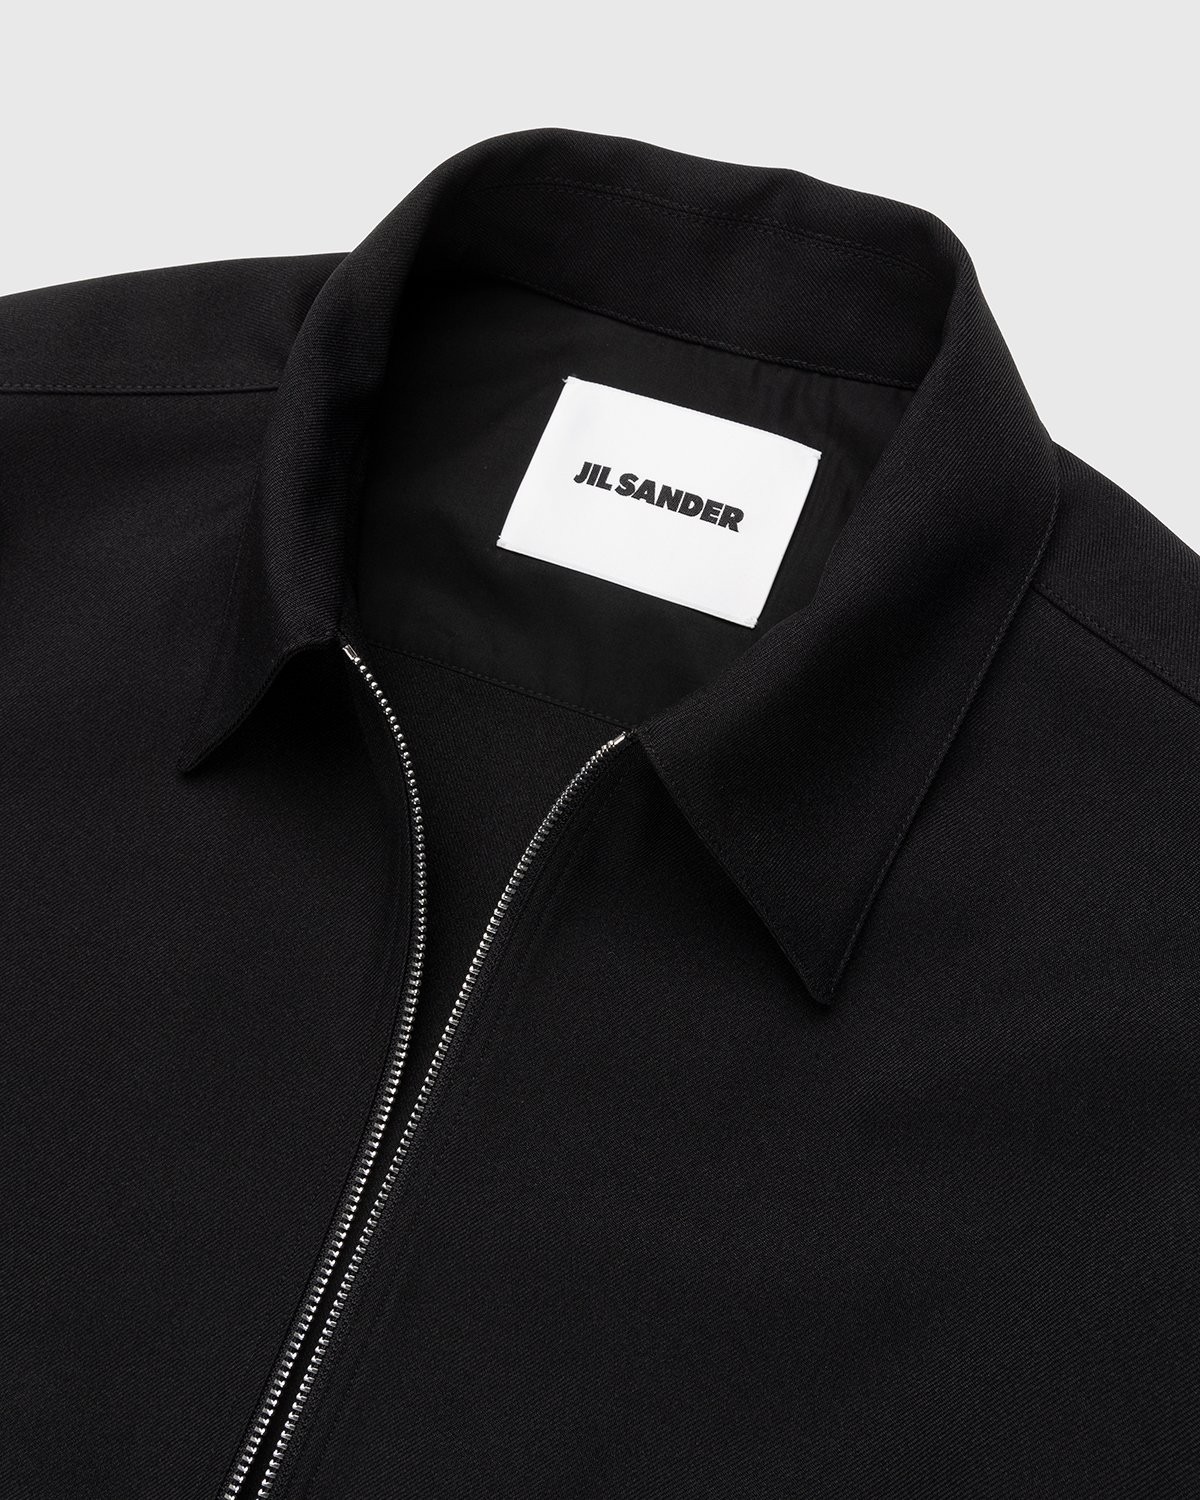 Jil Sander - Full Zip Shirt Black - Clothing - Black - Image 5